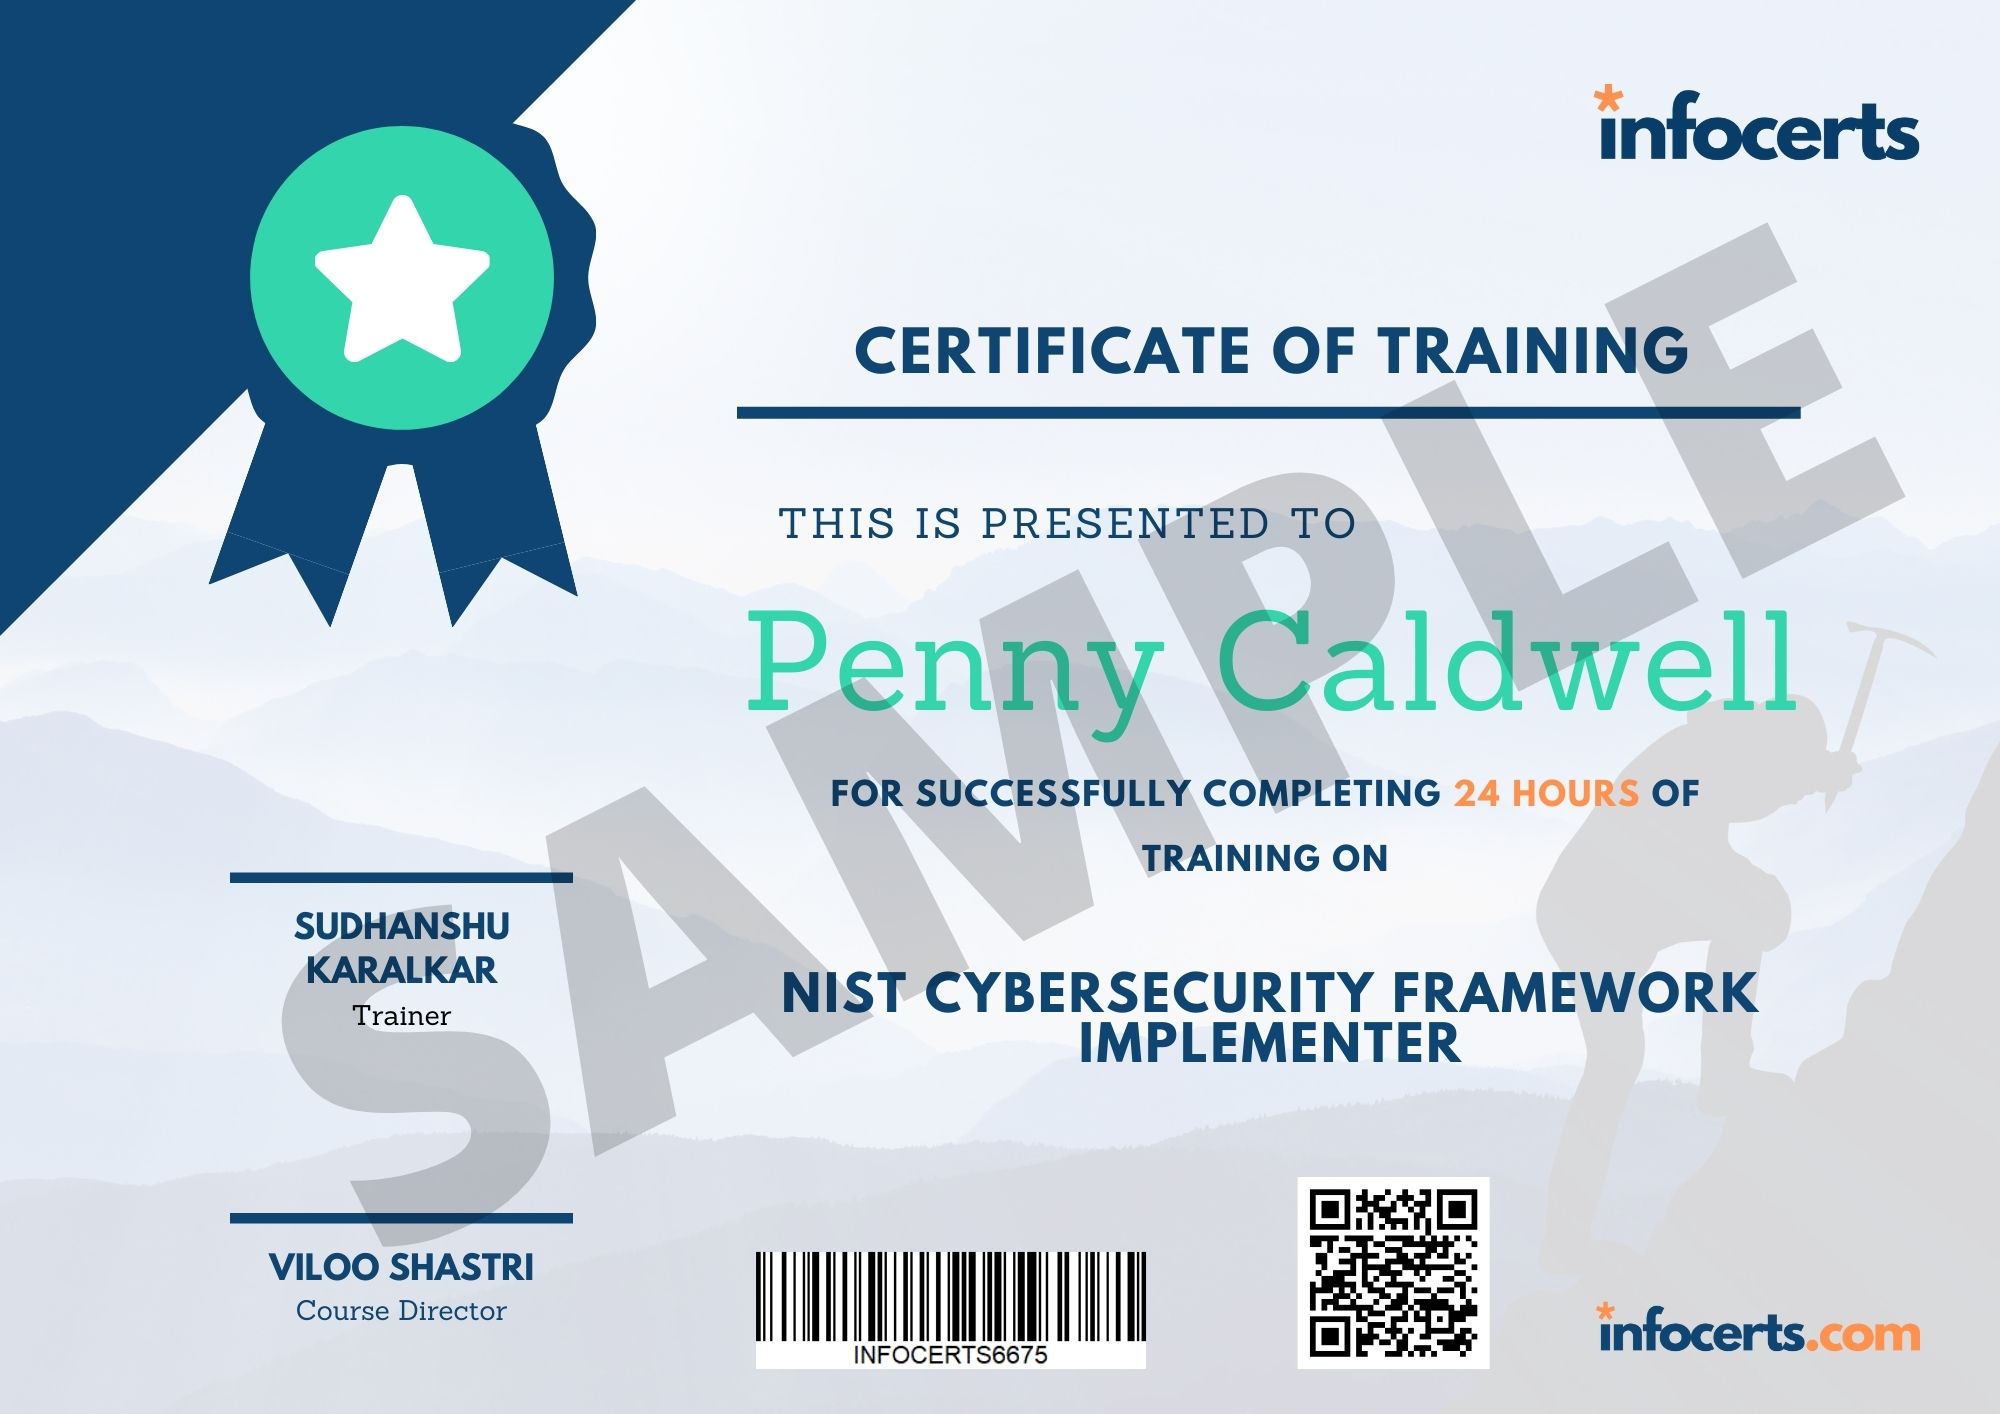 NIST CyberSecurity Framework Implementer Infocerts